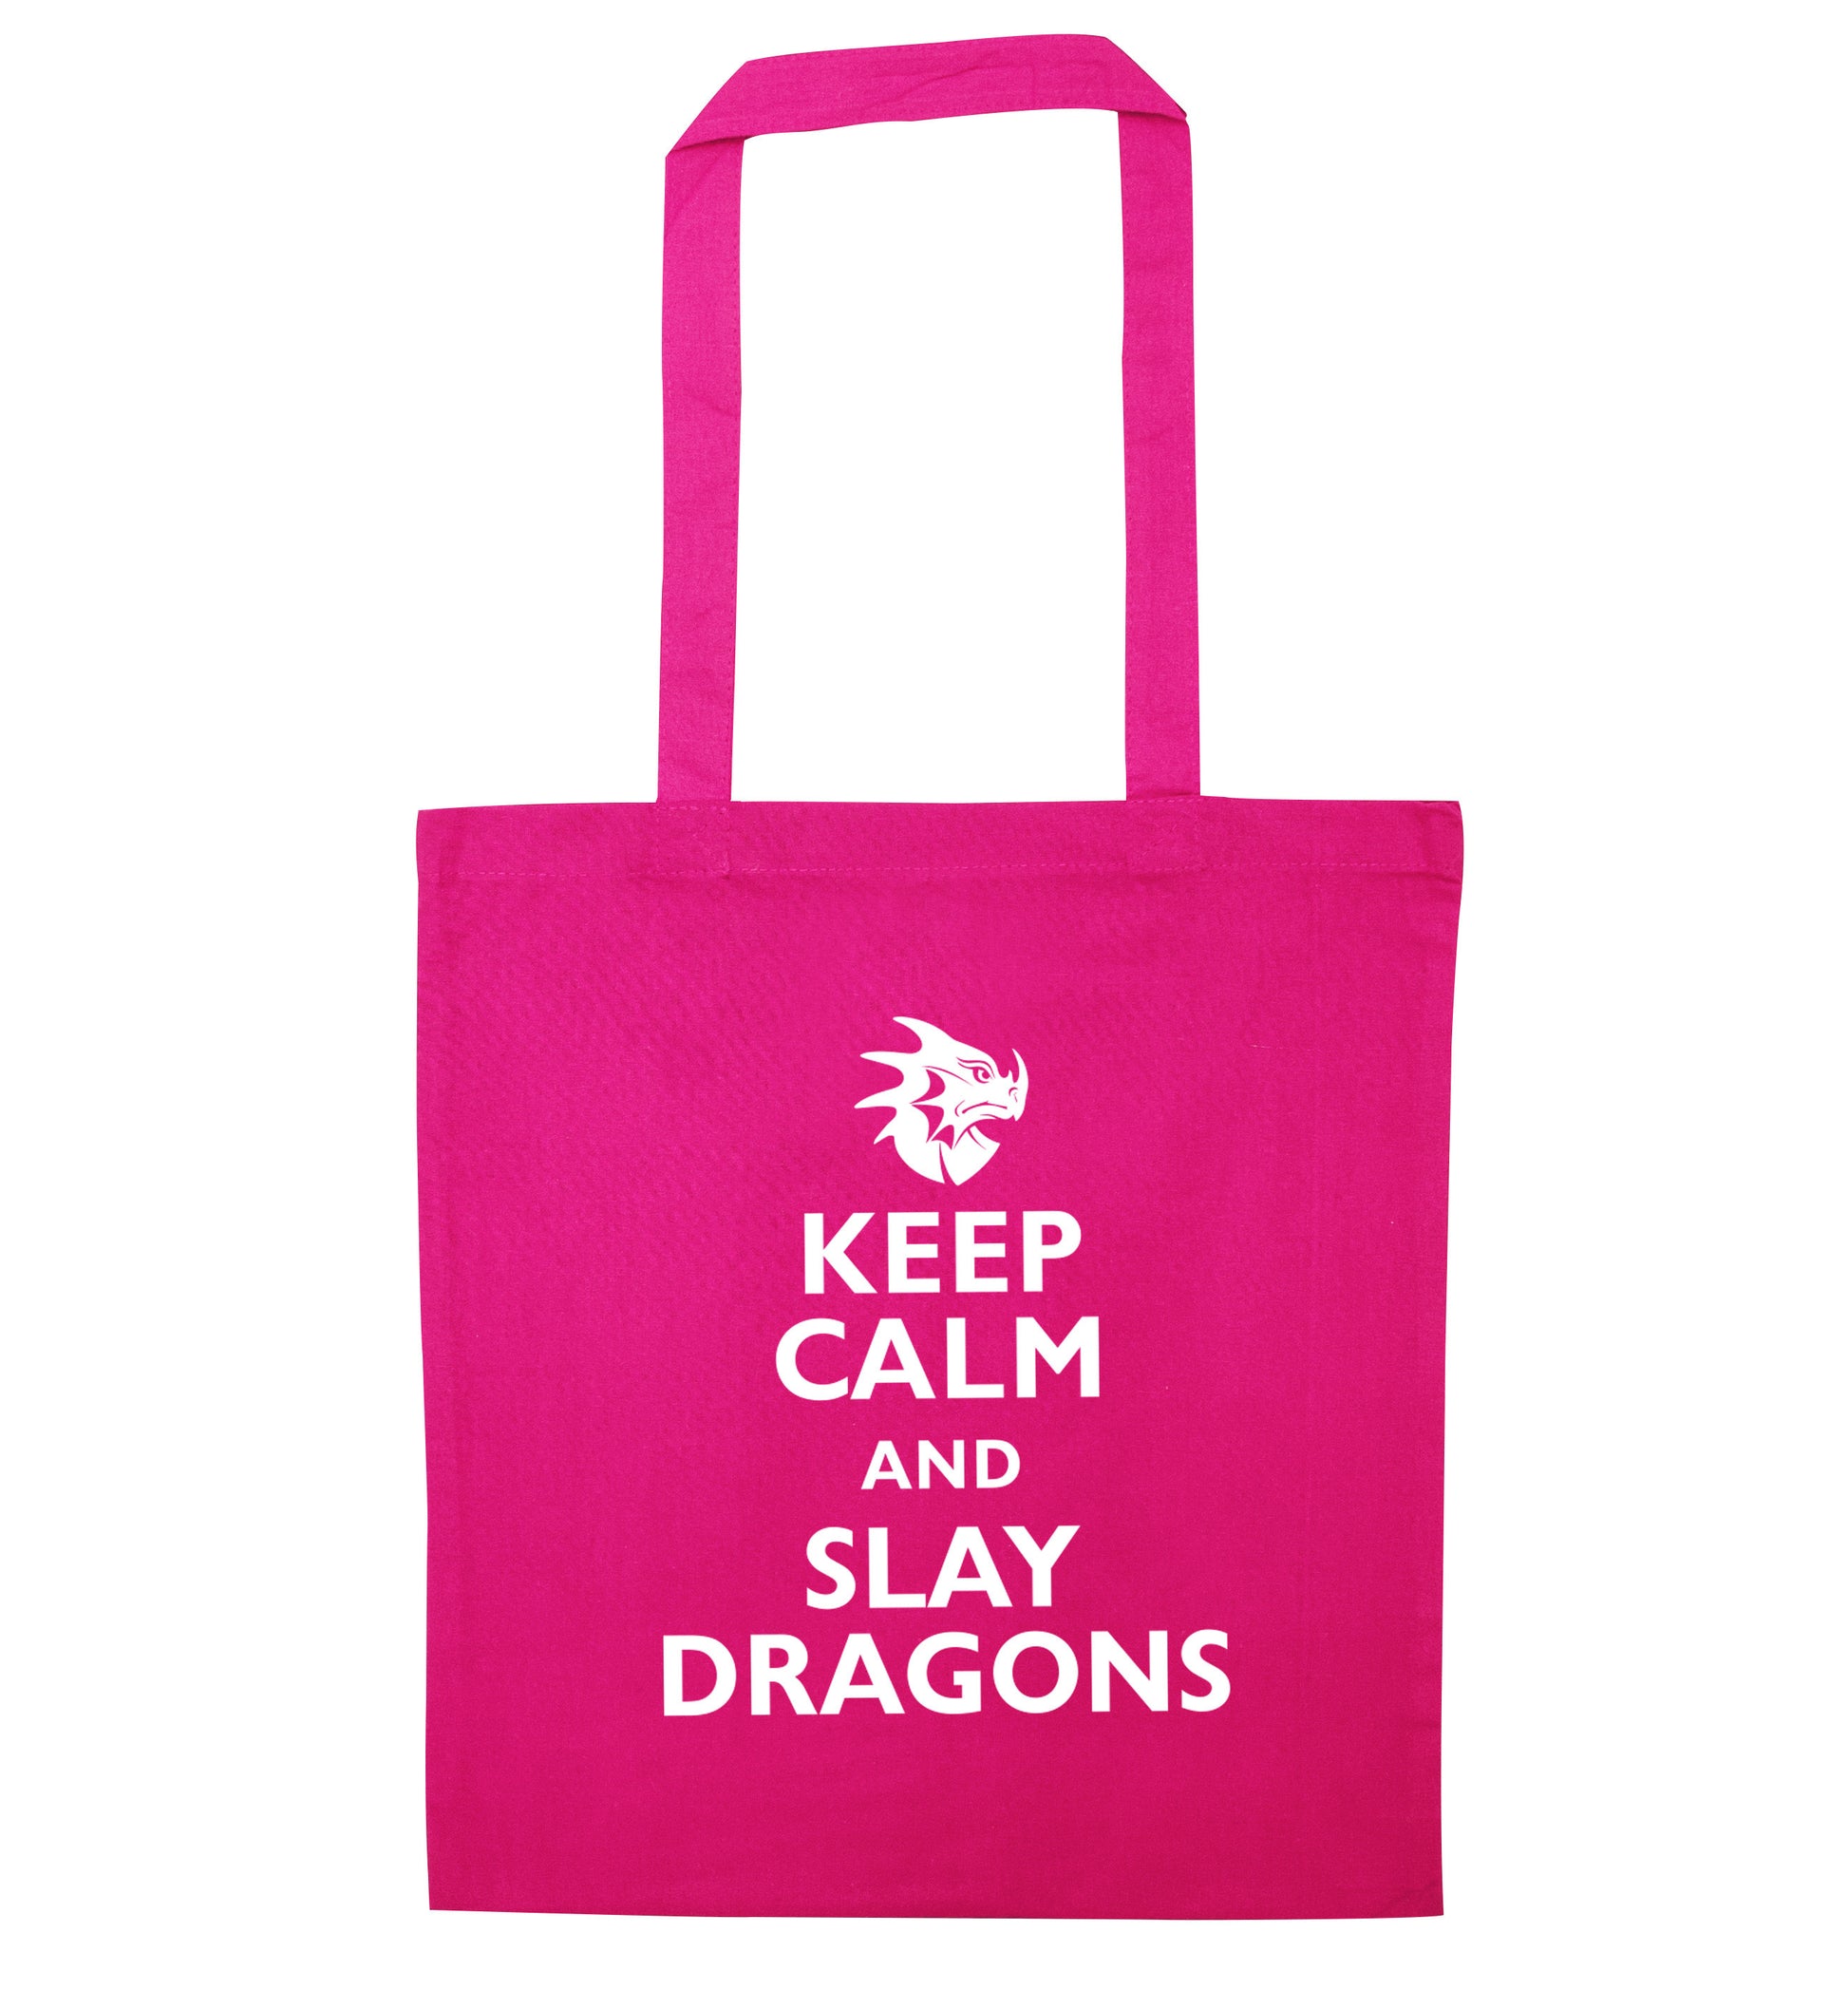 Keep calm and slay dragons pink tote bag